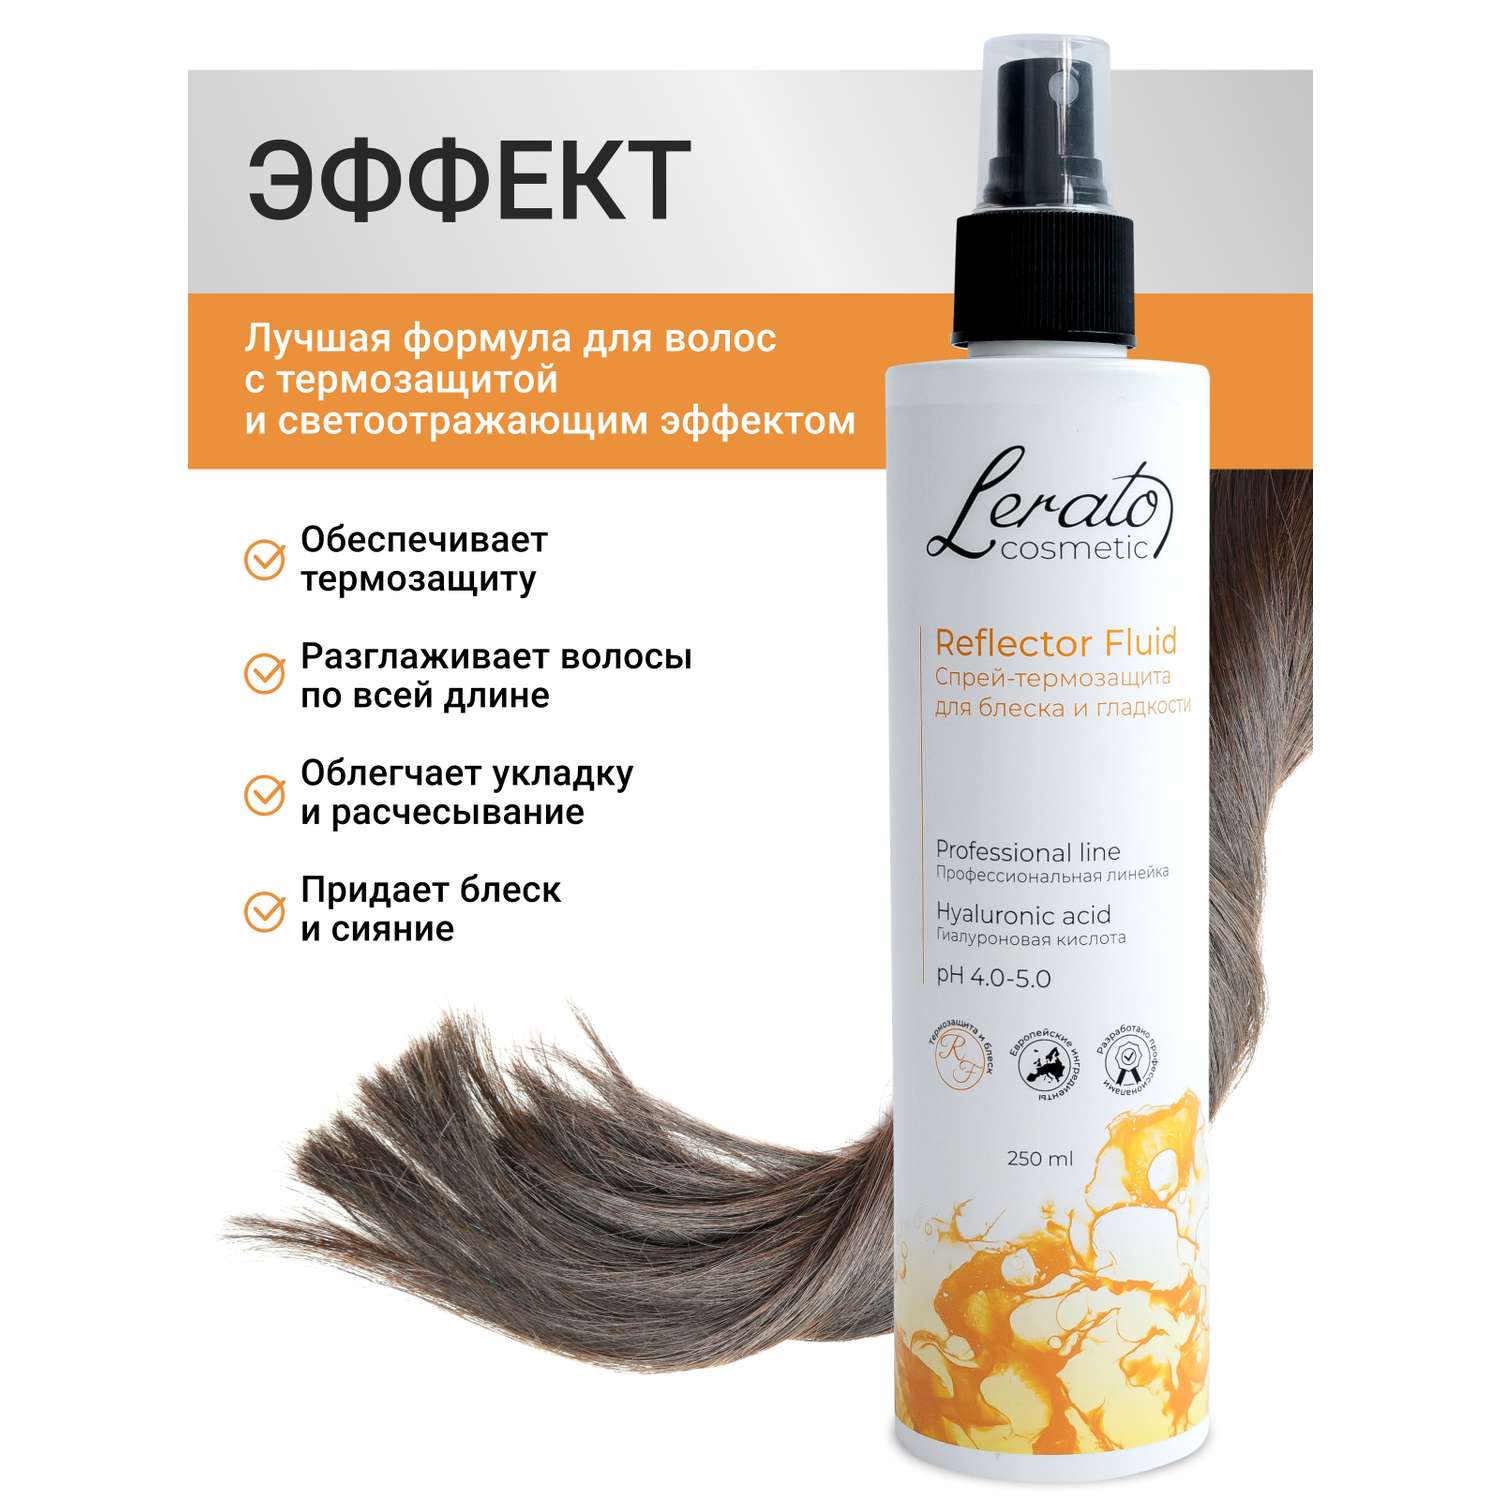 Спрей термозащита Lerato Cosmetic для блеска и гладкости волос 250 мл - фото 4